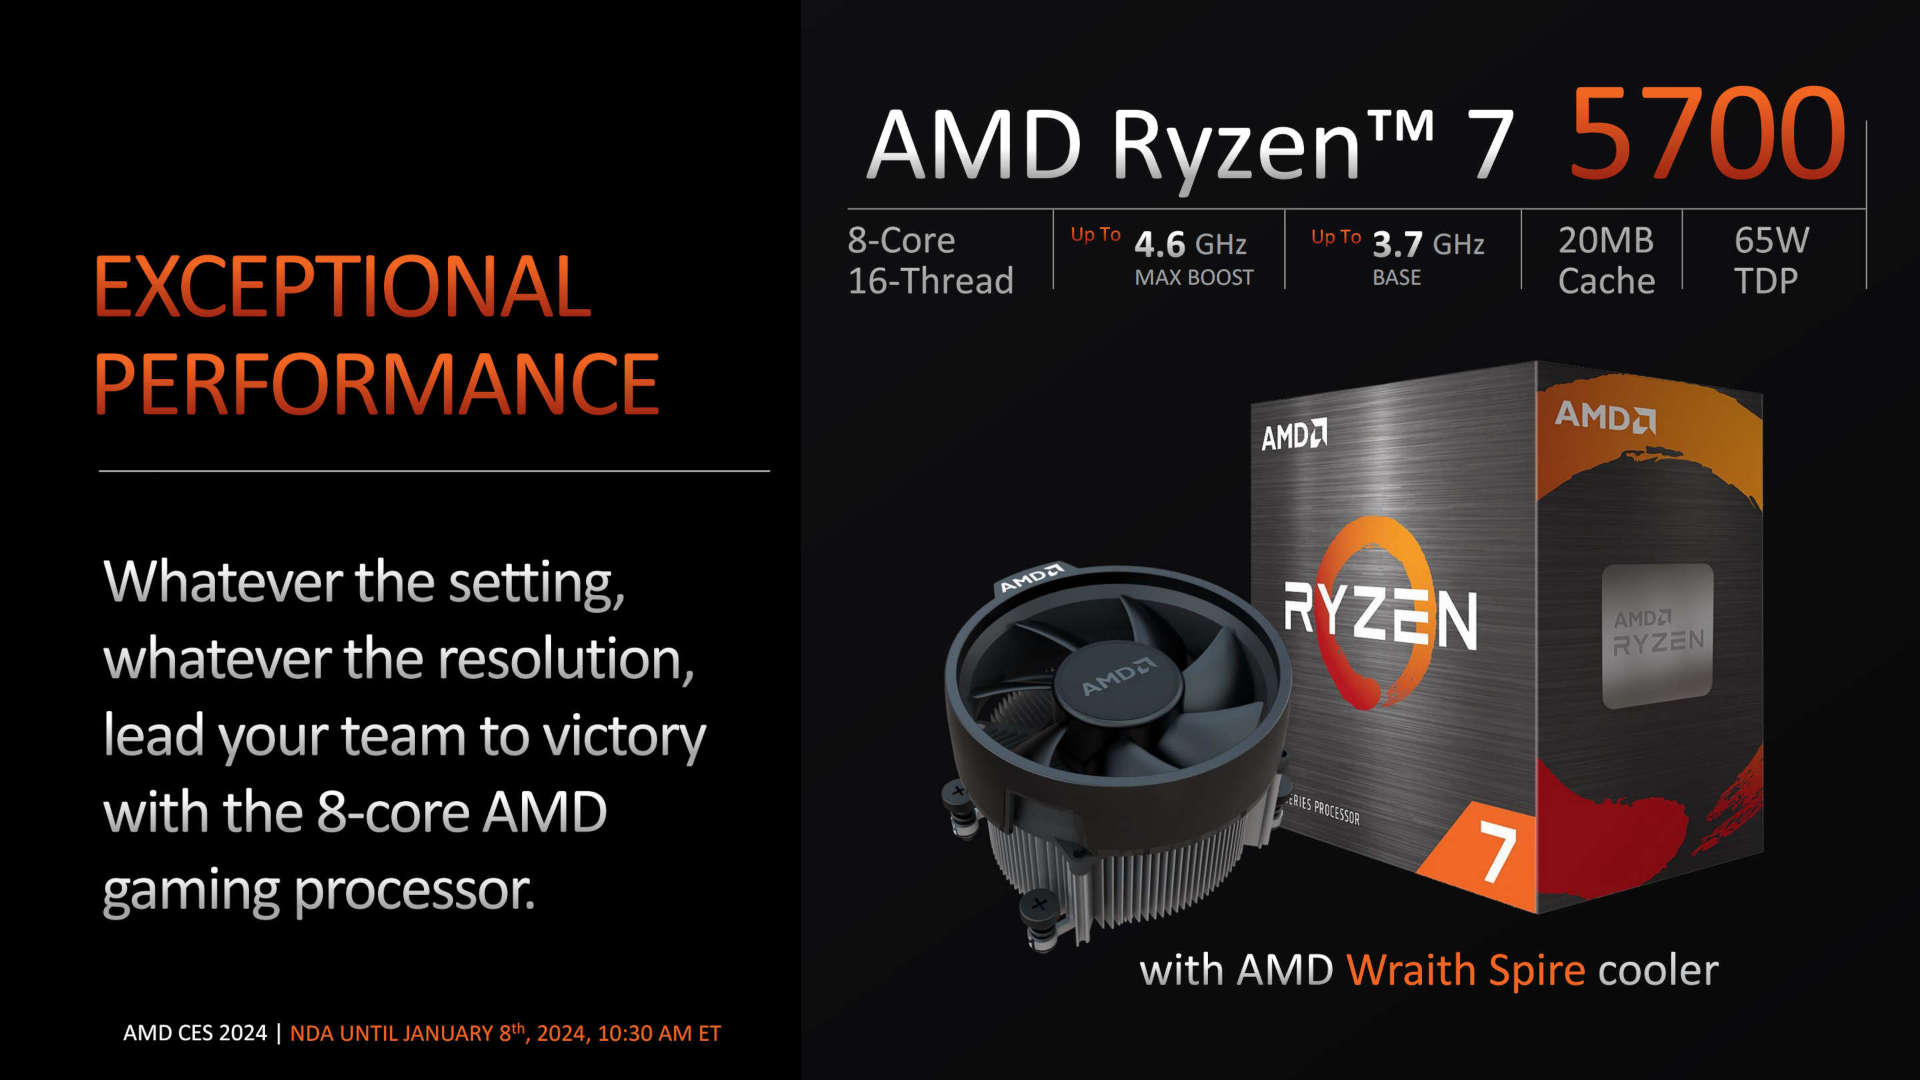 AMD Ryzen 7 5700 promotional information